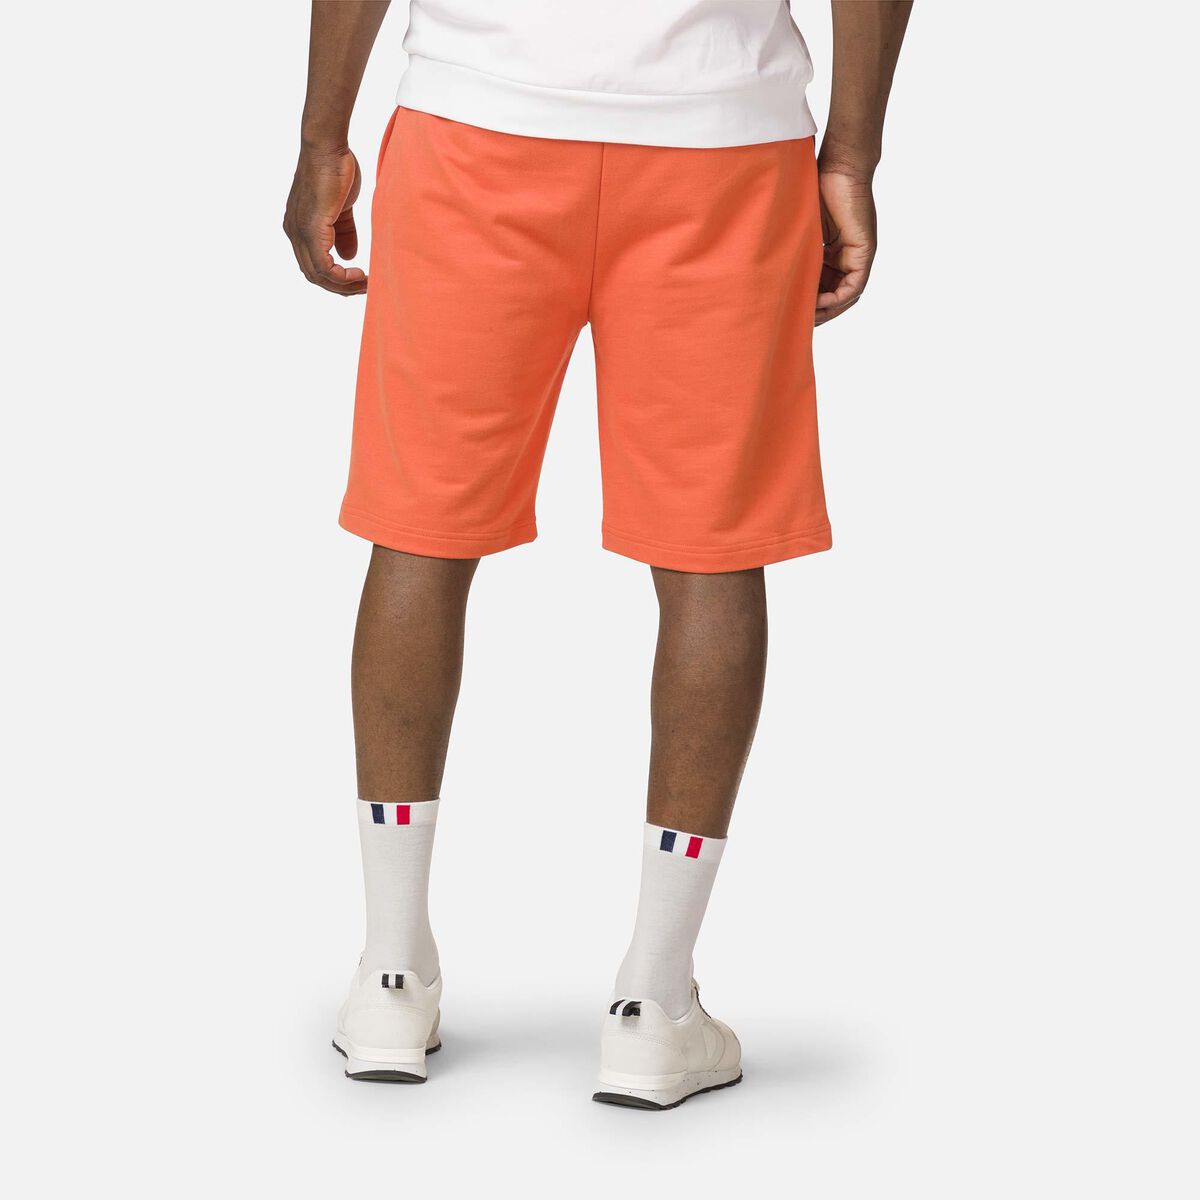 Rossignol Men's logo cotton shorts Orange